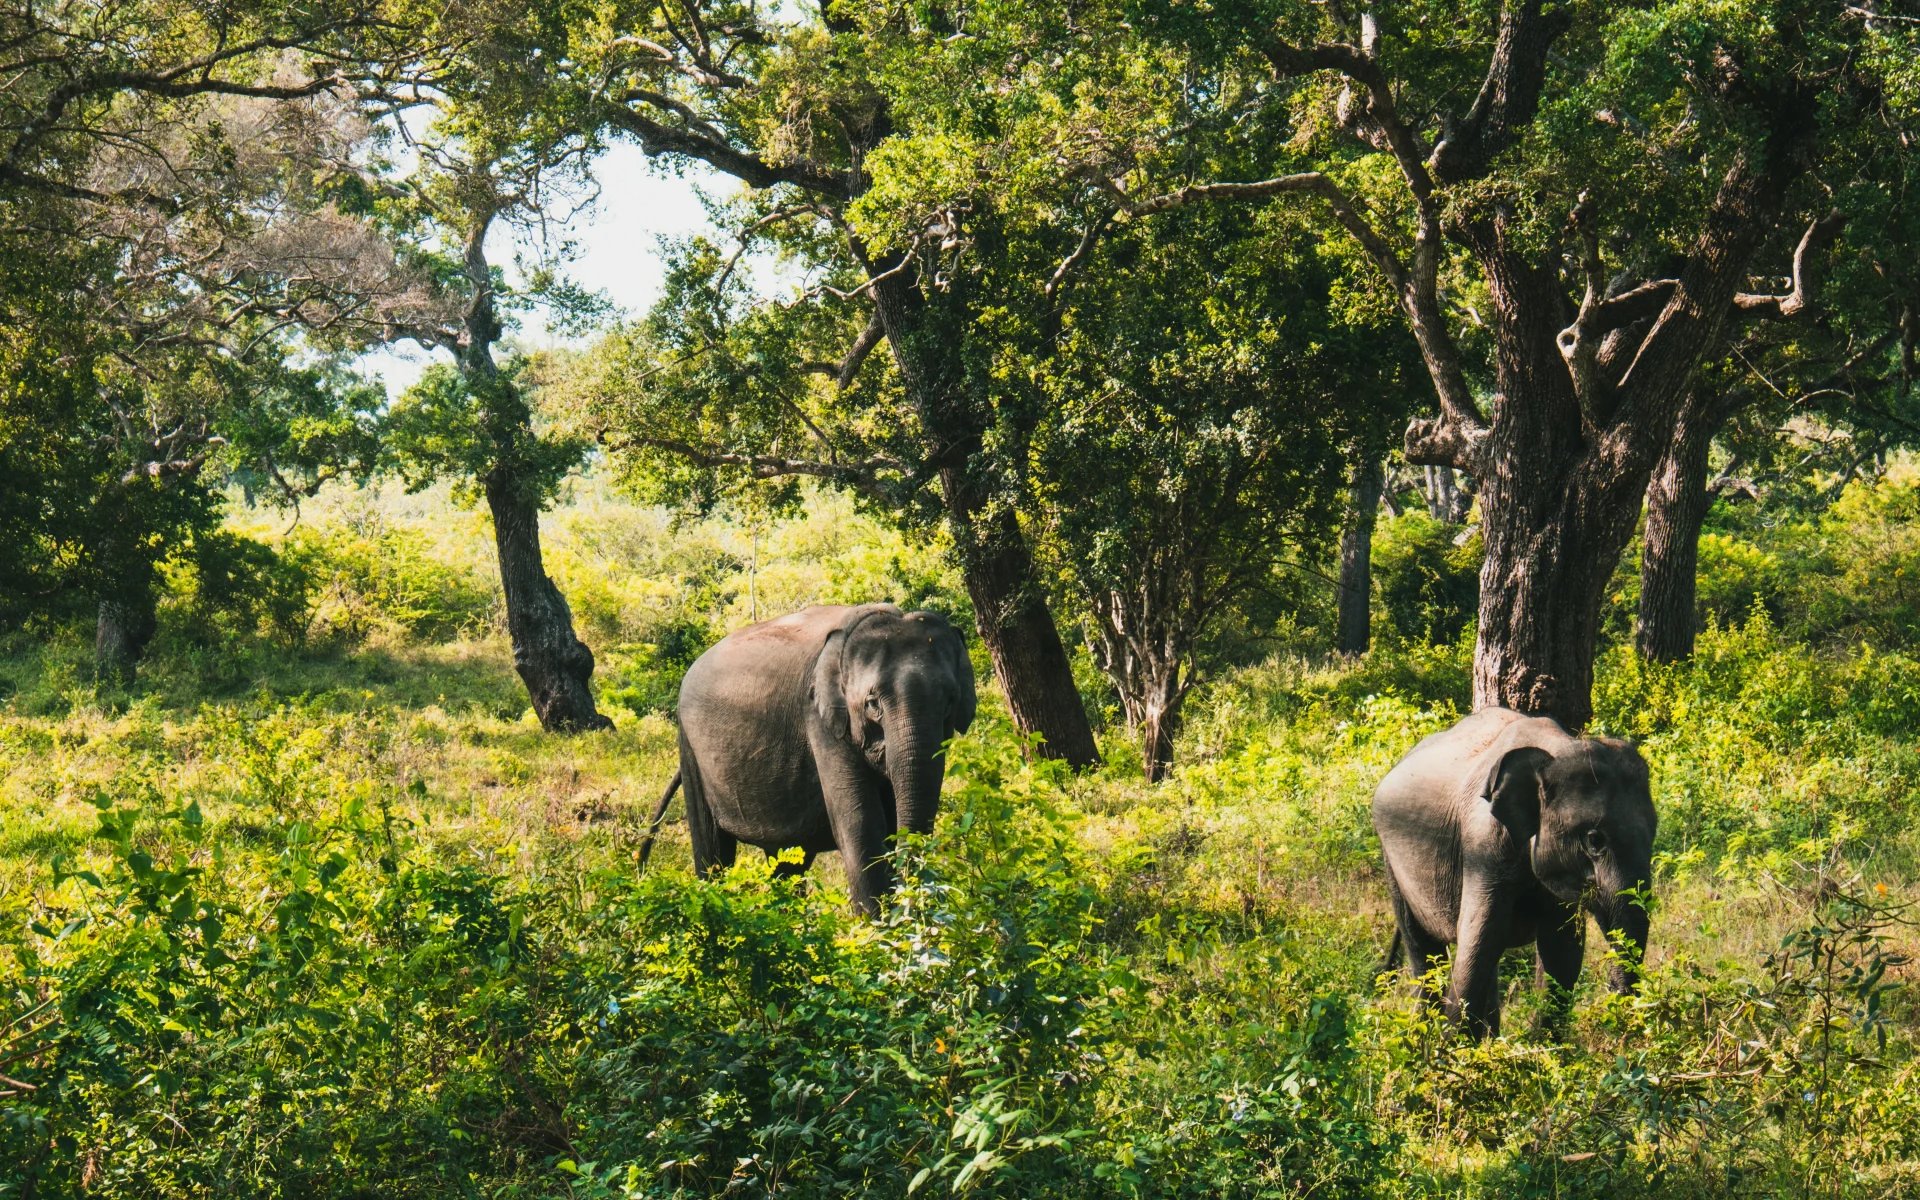 Two elephants in Yala National Park.